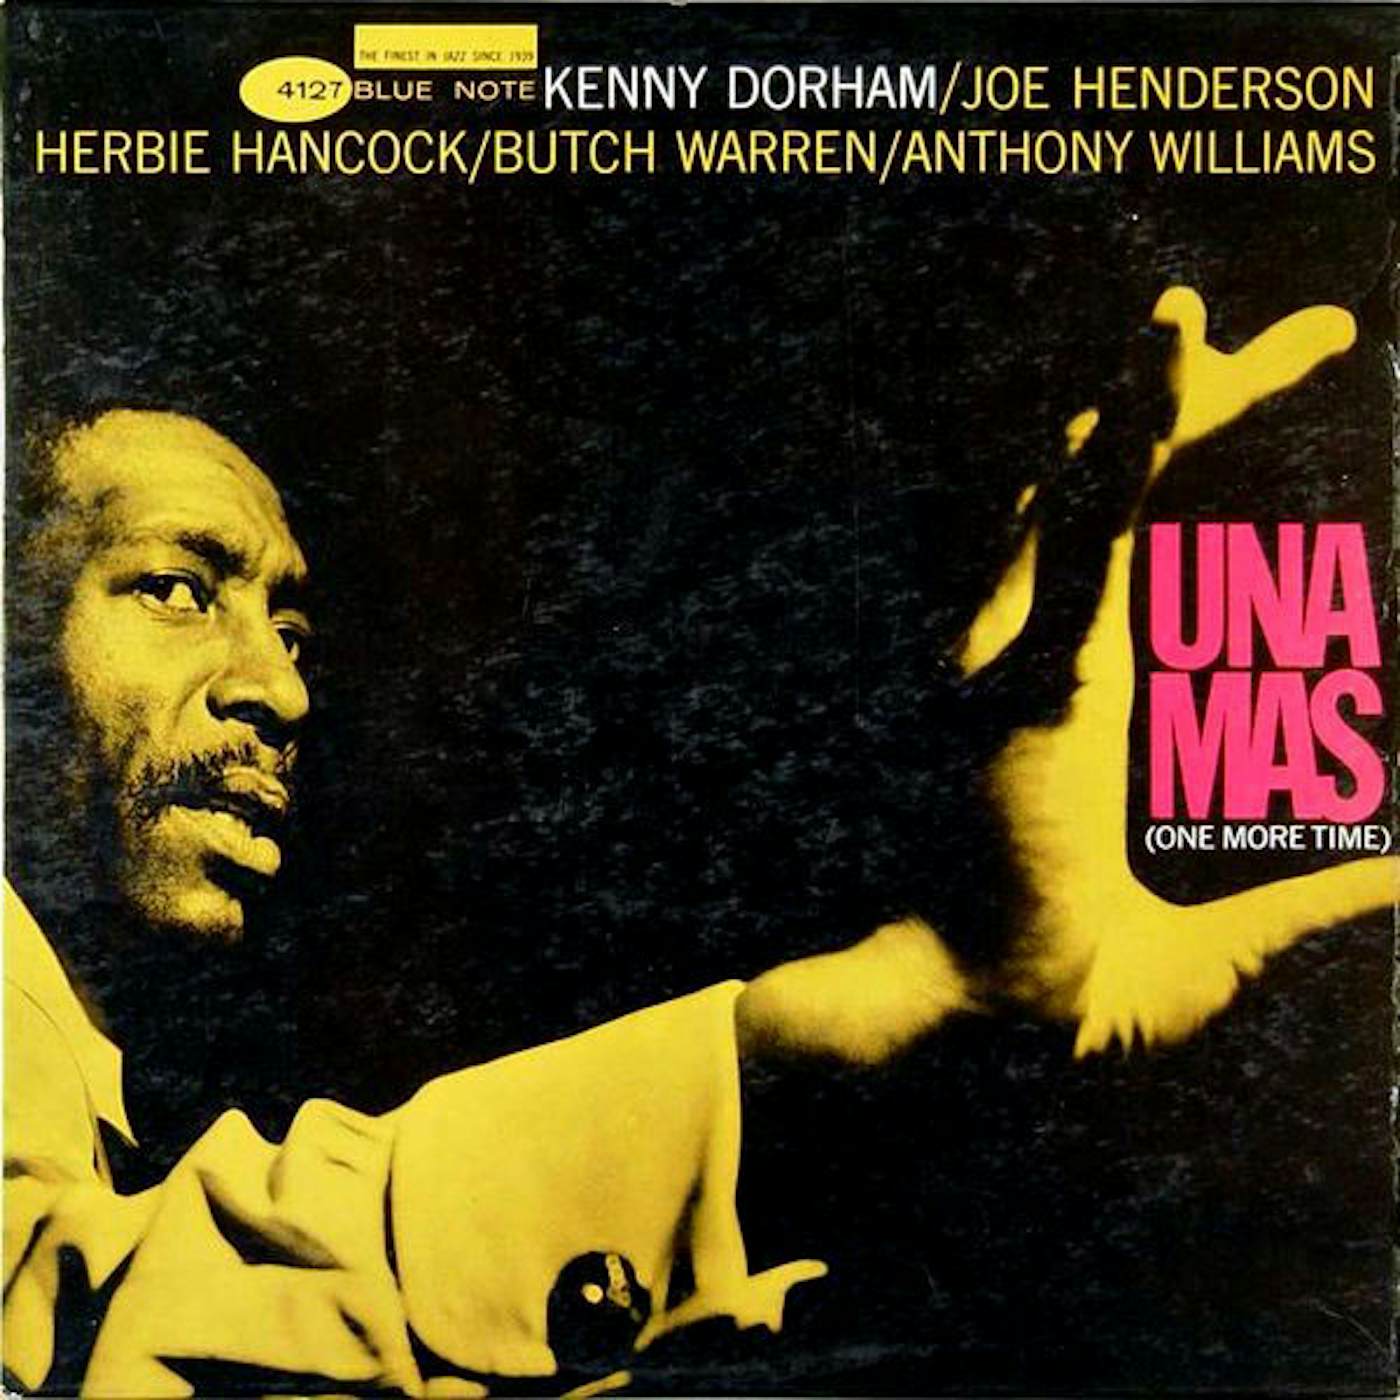 Kenny Dorham UNA MAS Vinyl Record